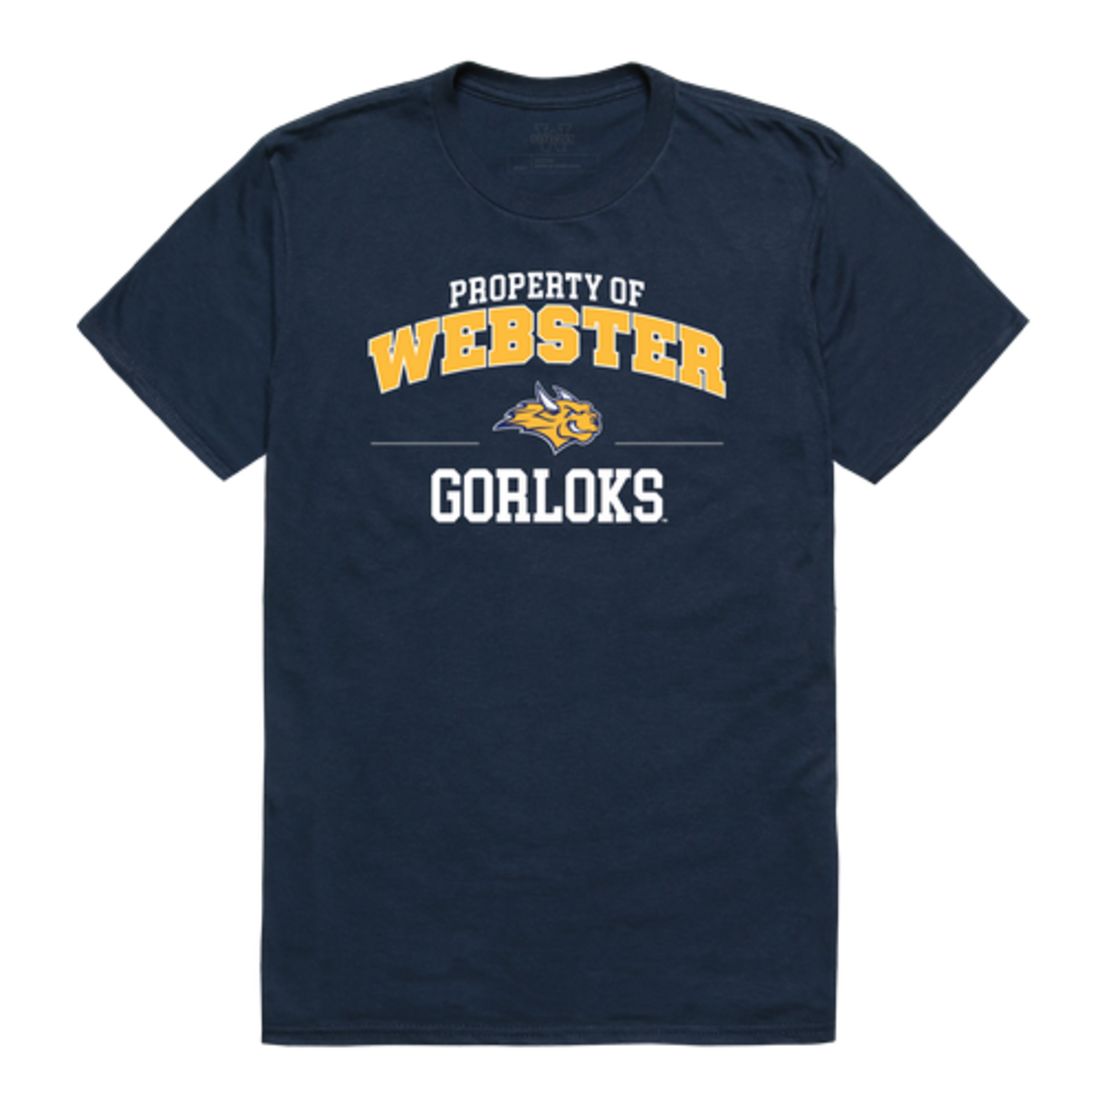 Webster University Gorlocks Property T-Shirt Tee